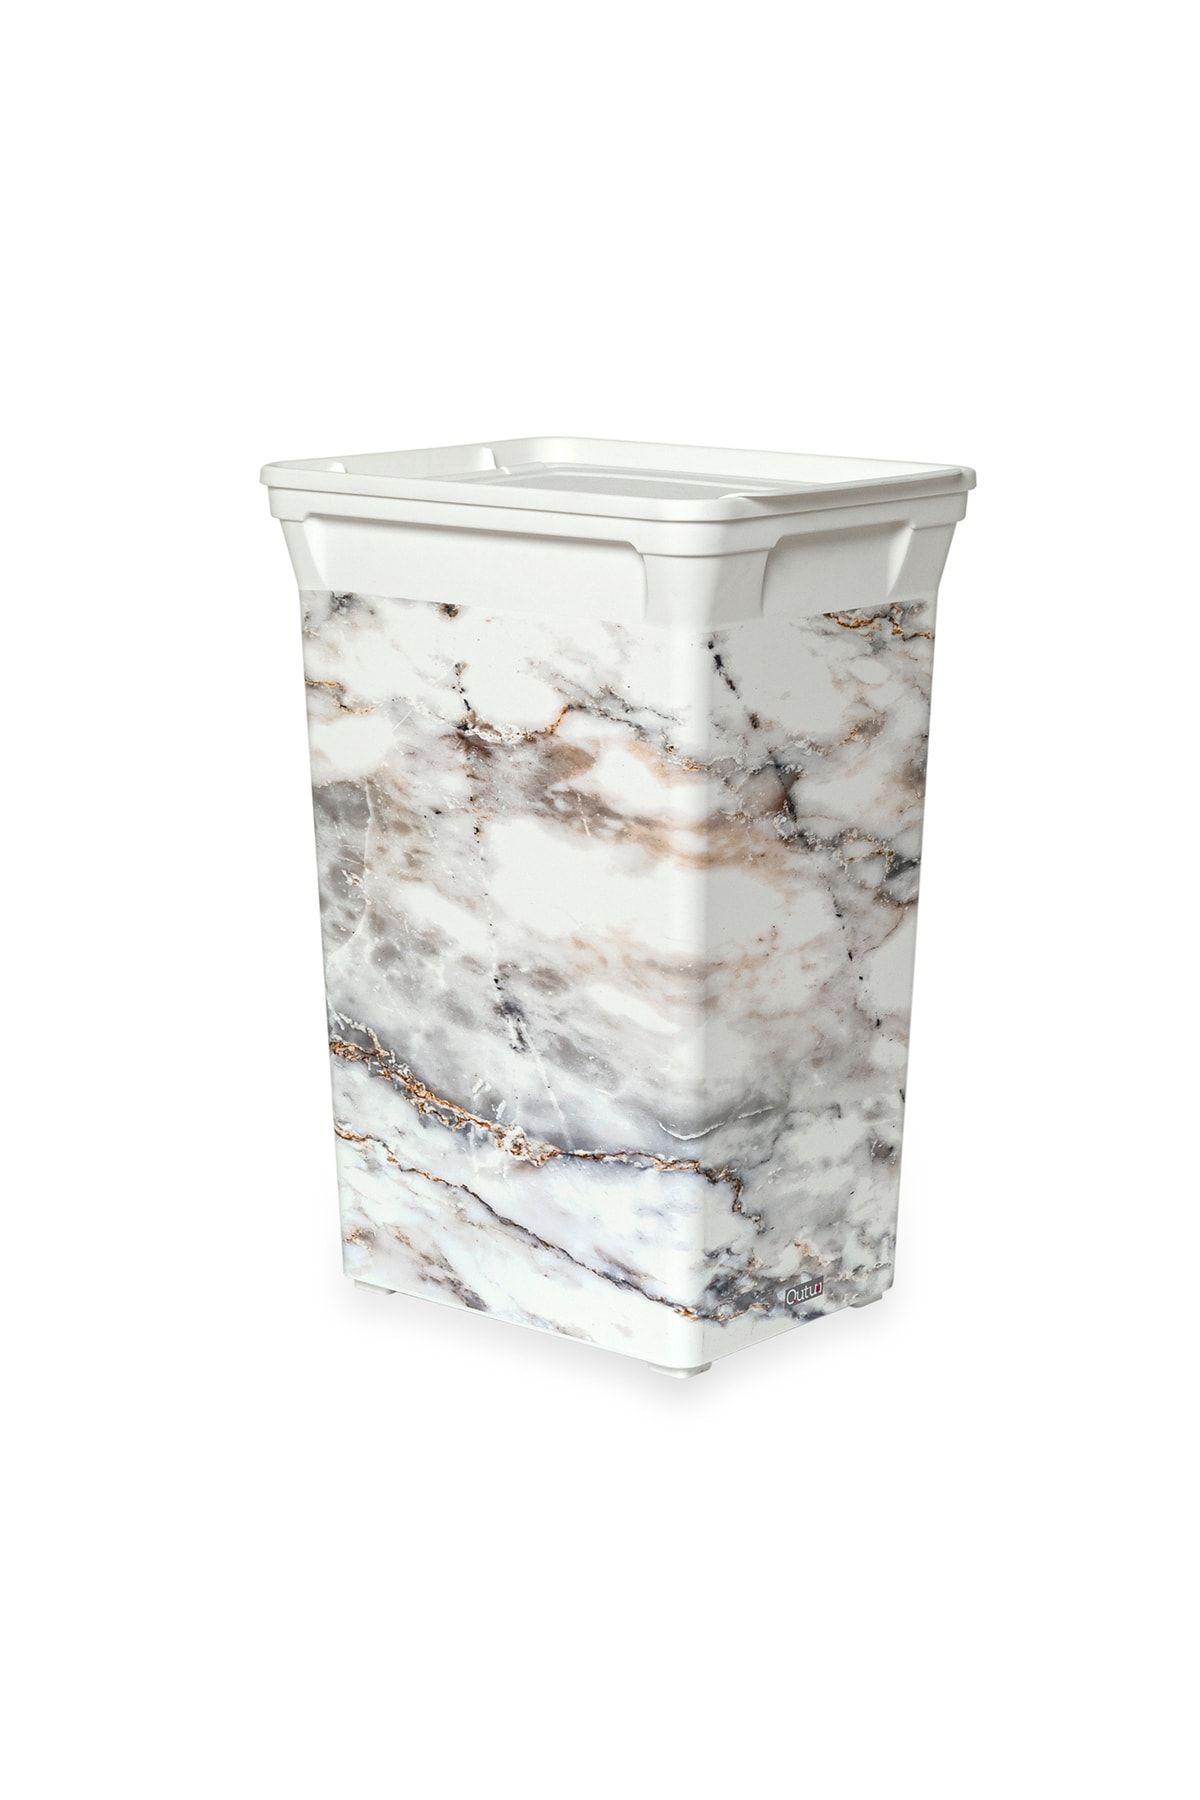 QUTU Trash Bin Marble Mutfak Çöp Kovası - 40 Litre